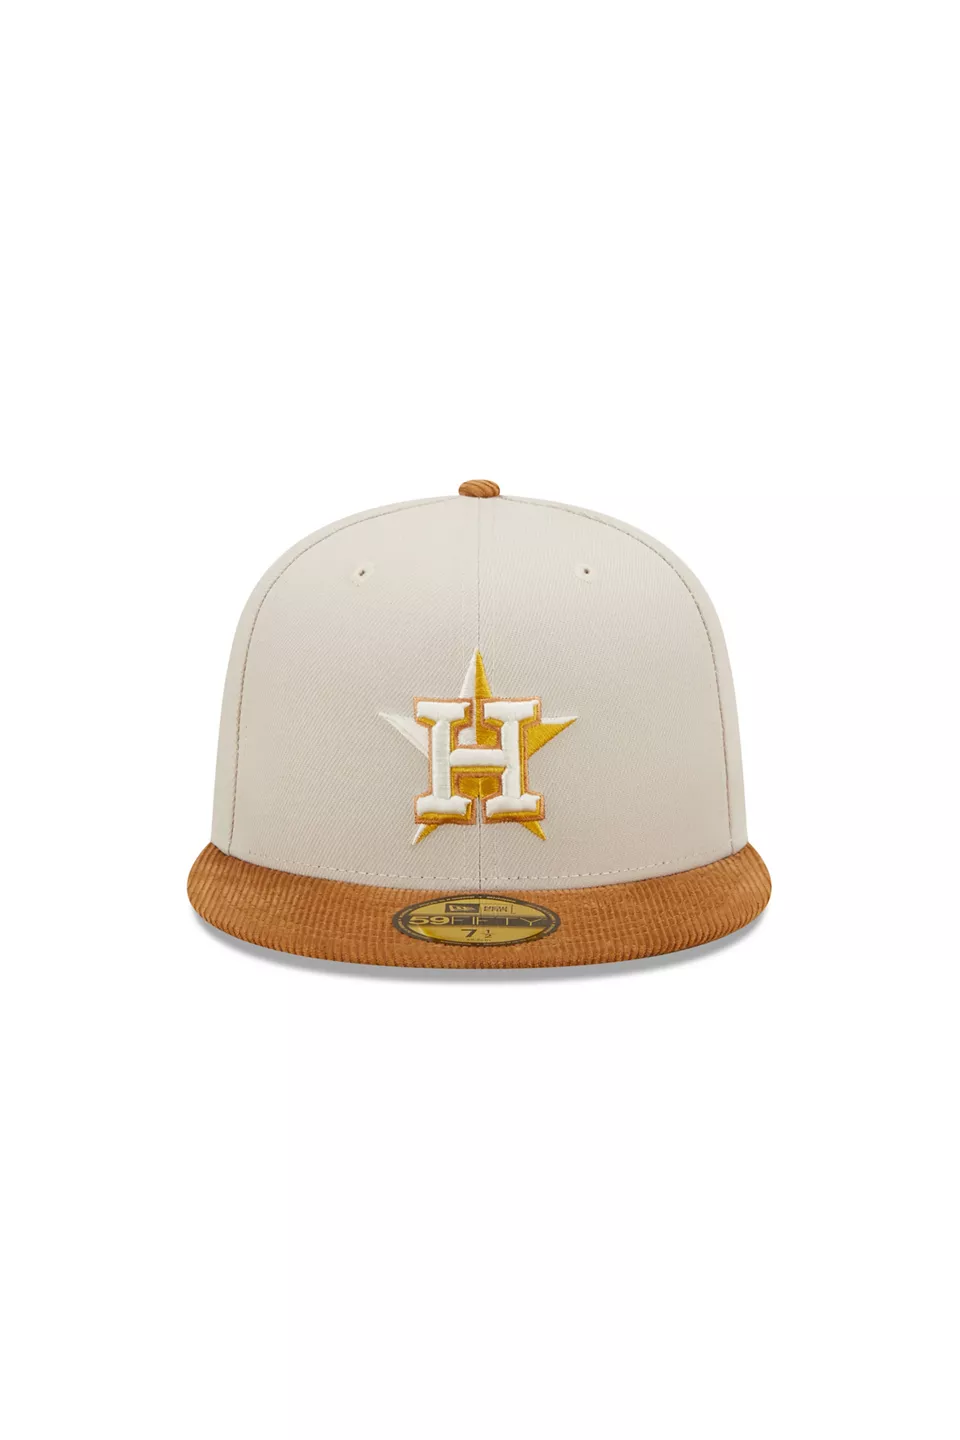 Houston Astros New Era Corduroy Golfer Adjustable Hat - Gray